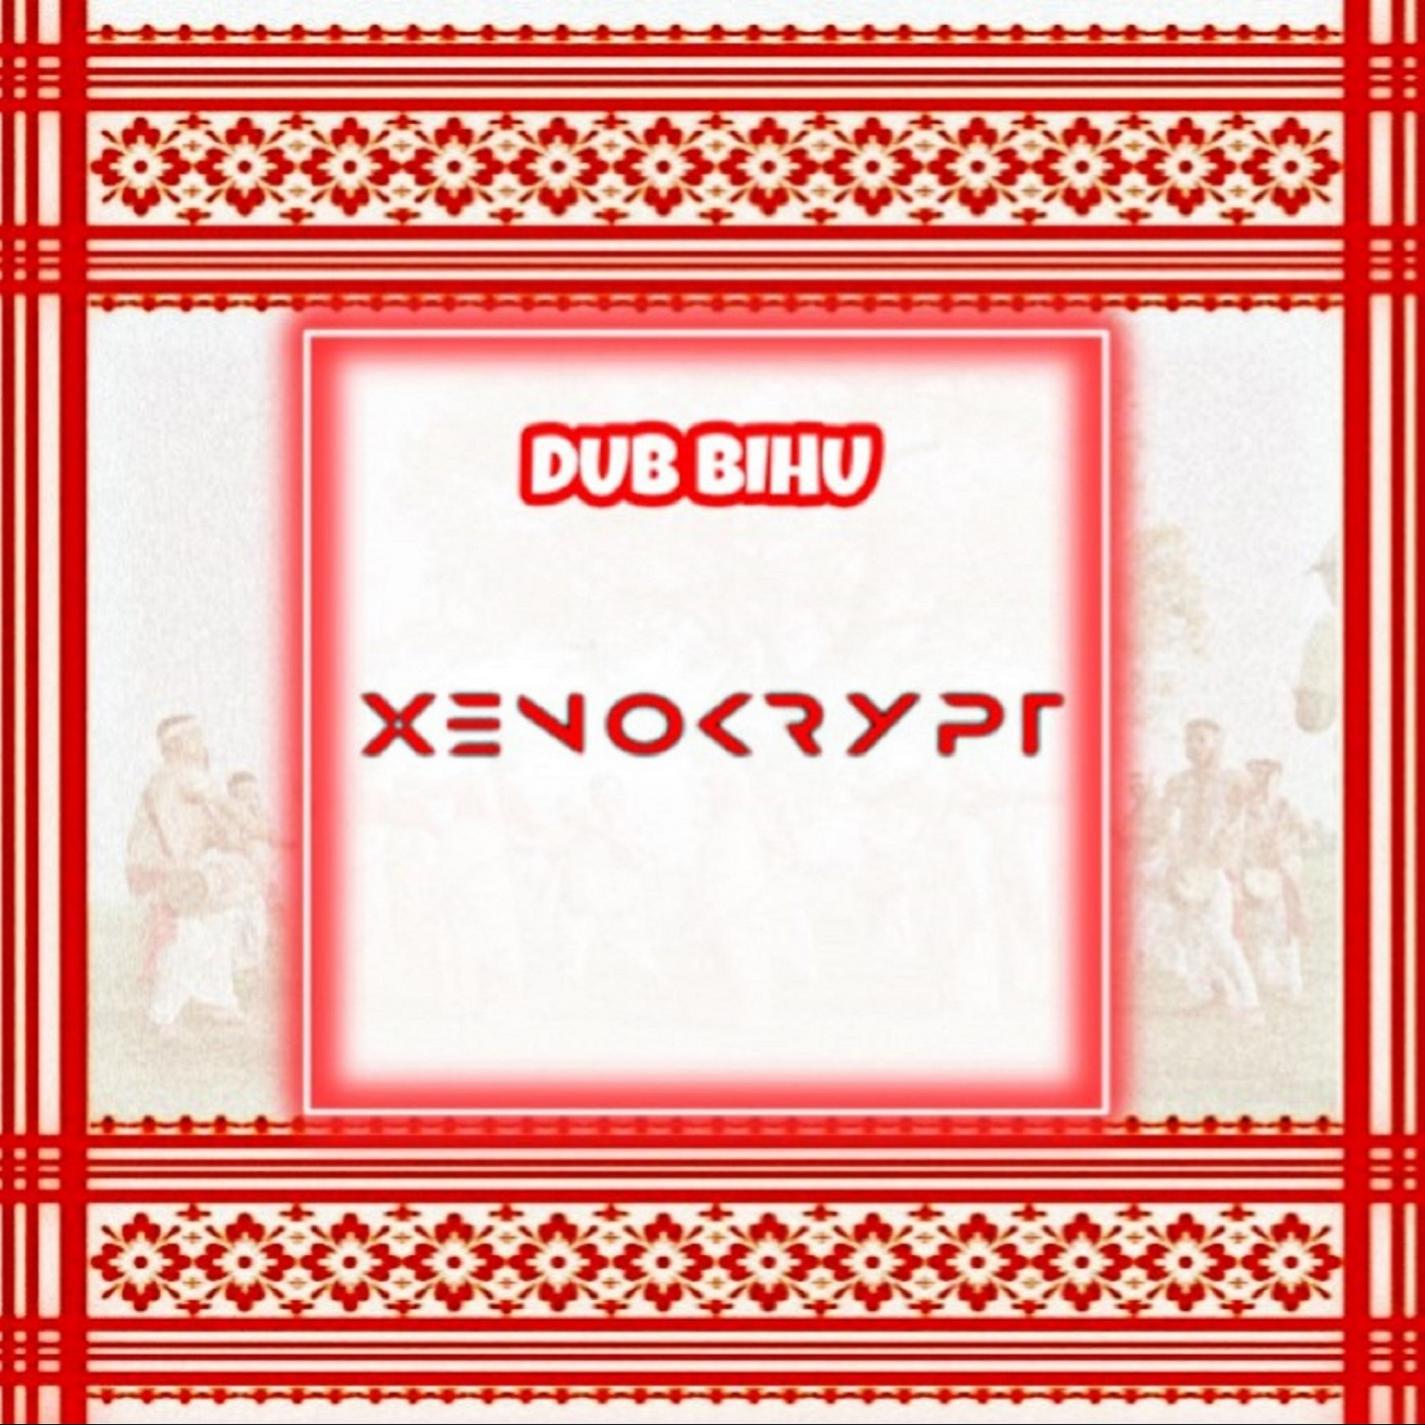 Xenokrypt - Dub Bihu